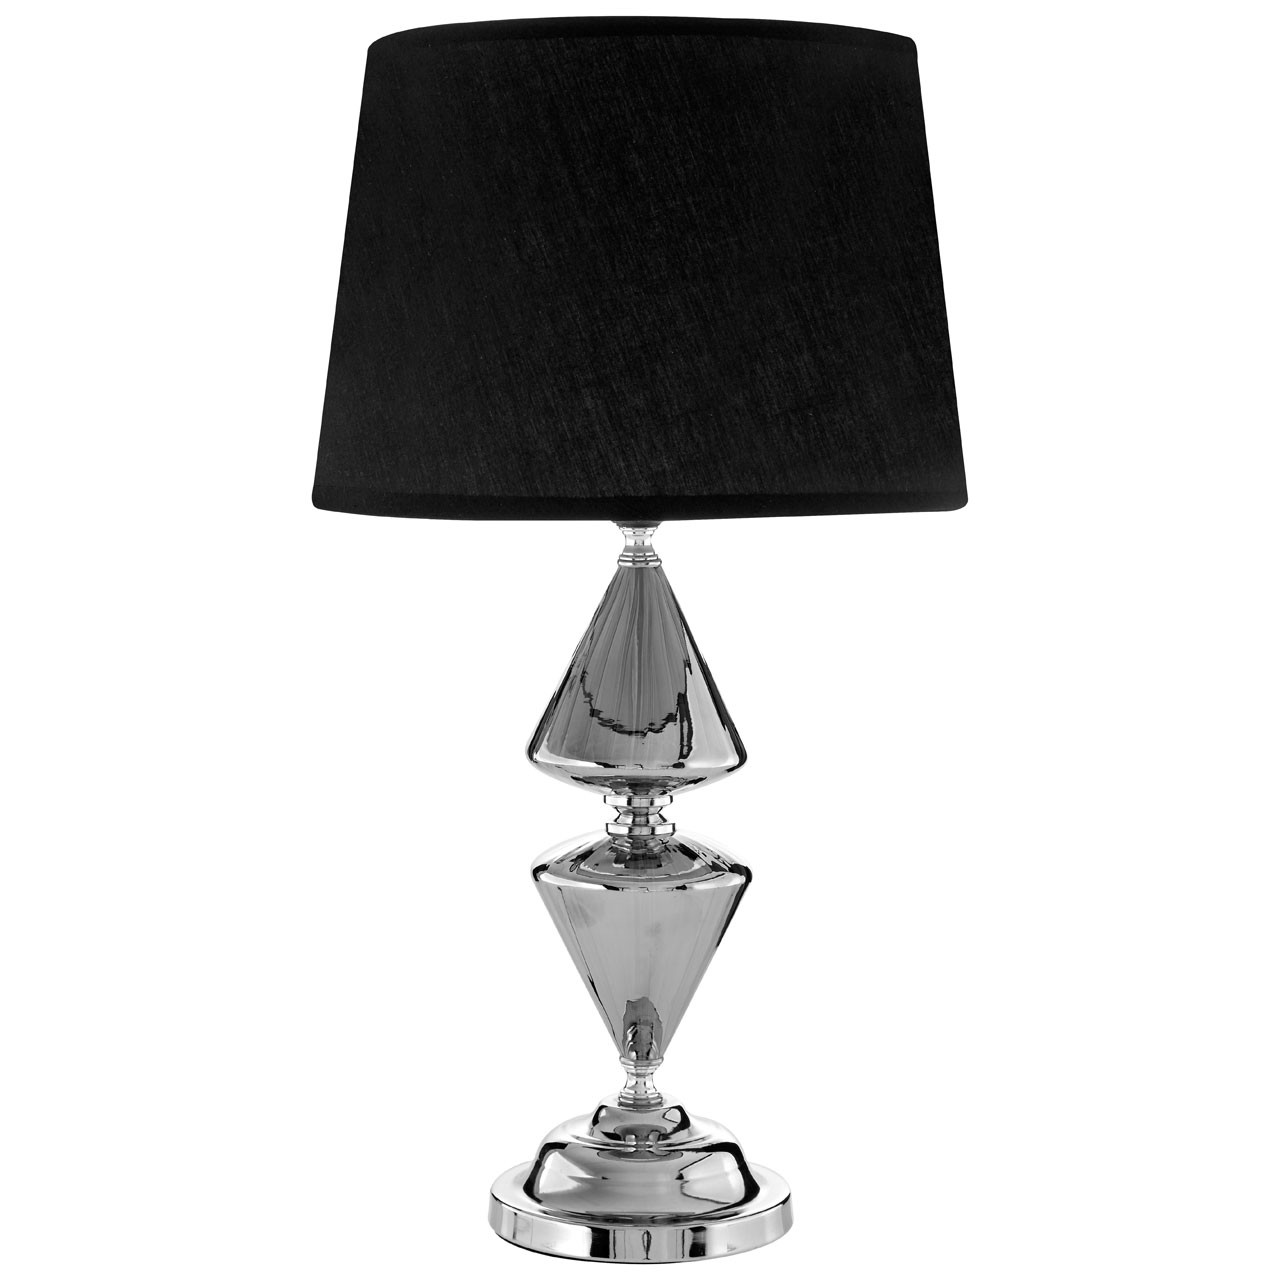 Prime Furnishing Honor Table Lamp, Ceramic - Black Pleat Shade